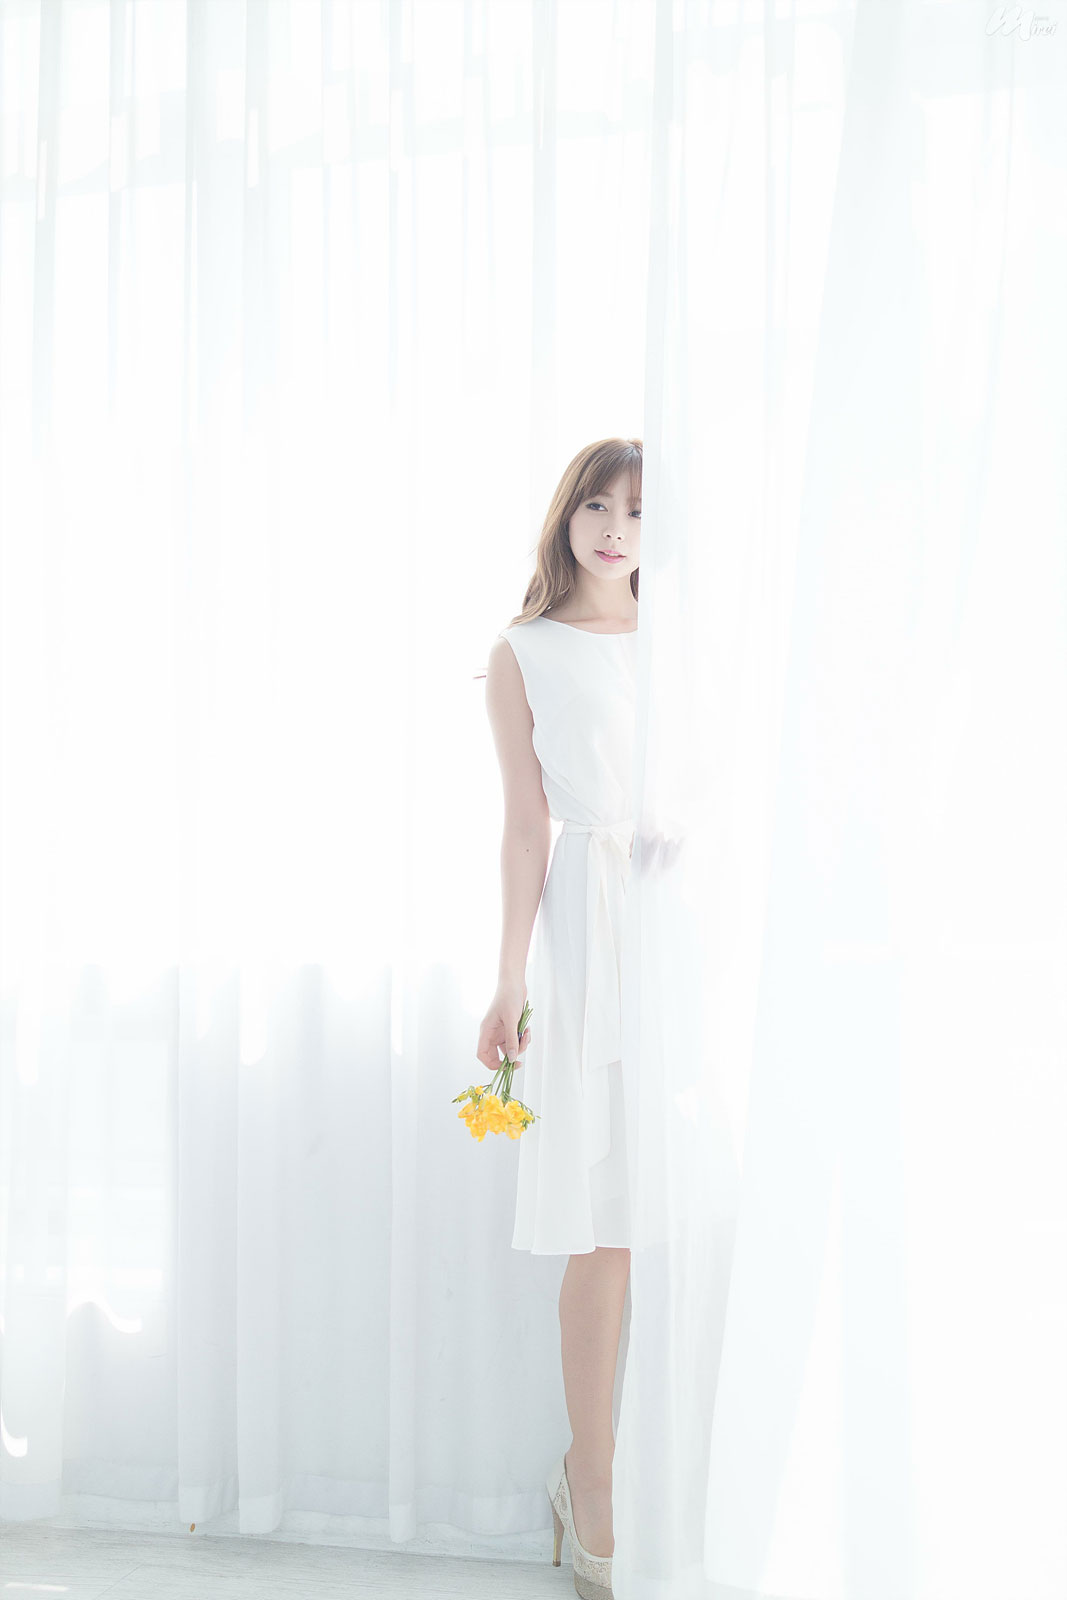 Seo Han Bit white dress studio photoshoot